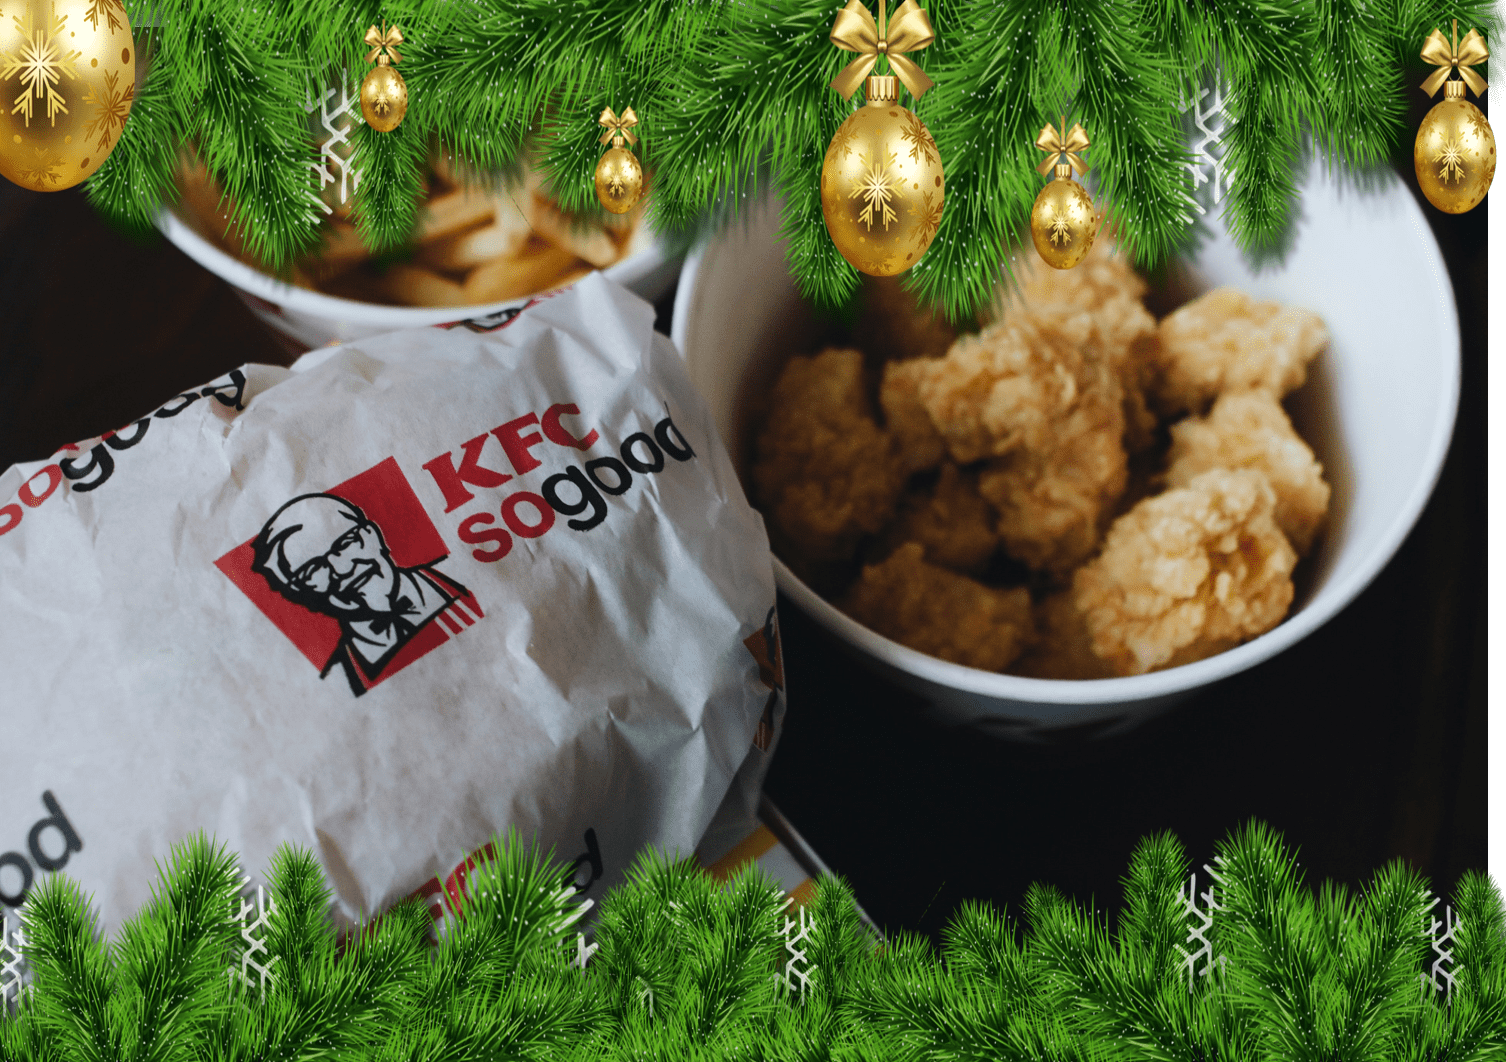 Strange Christmas Traditions: The KFC “Turkey”